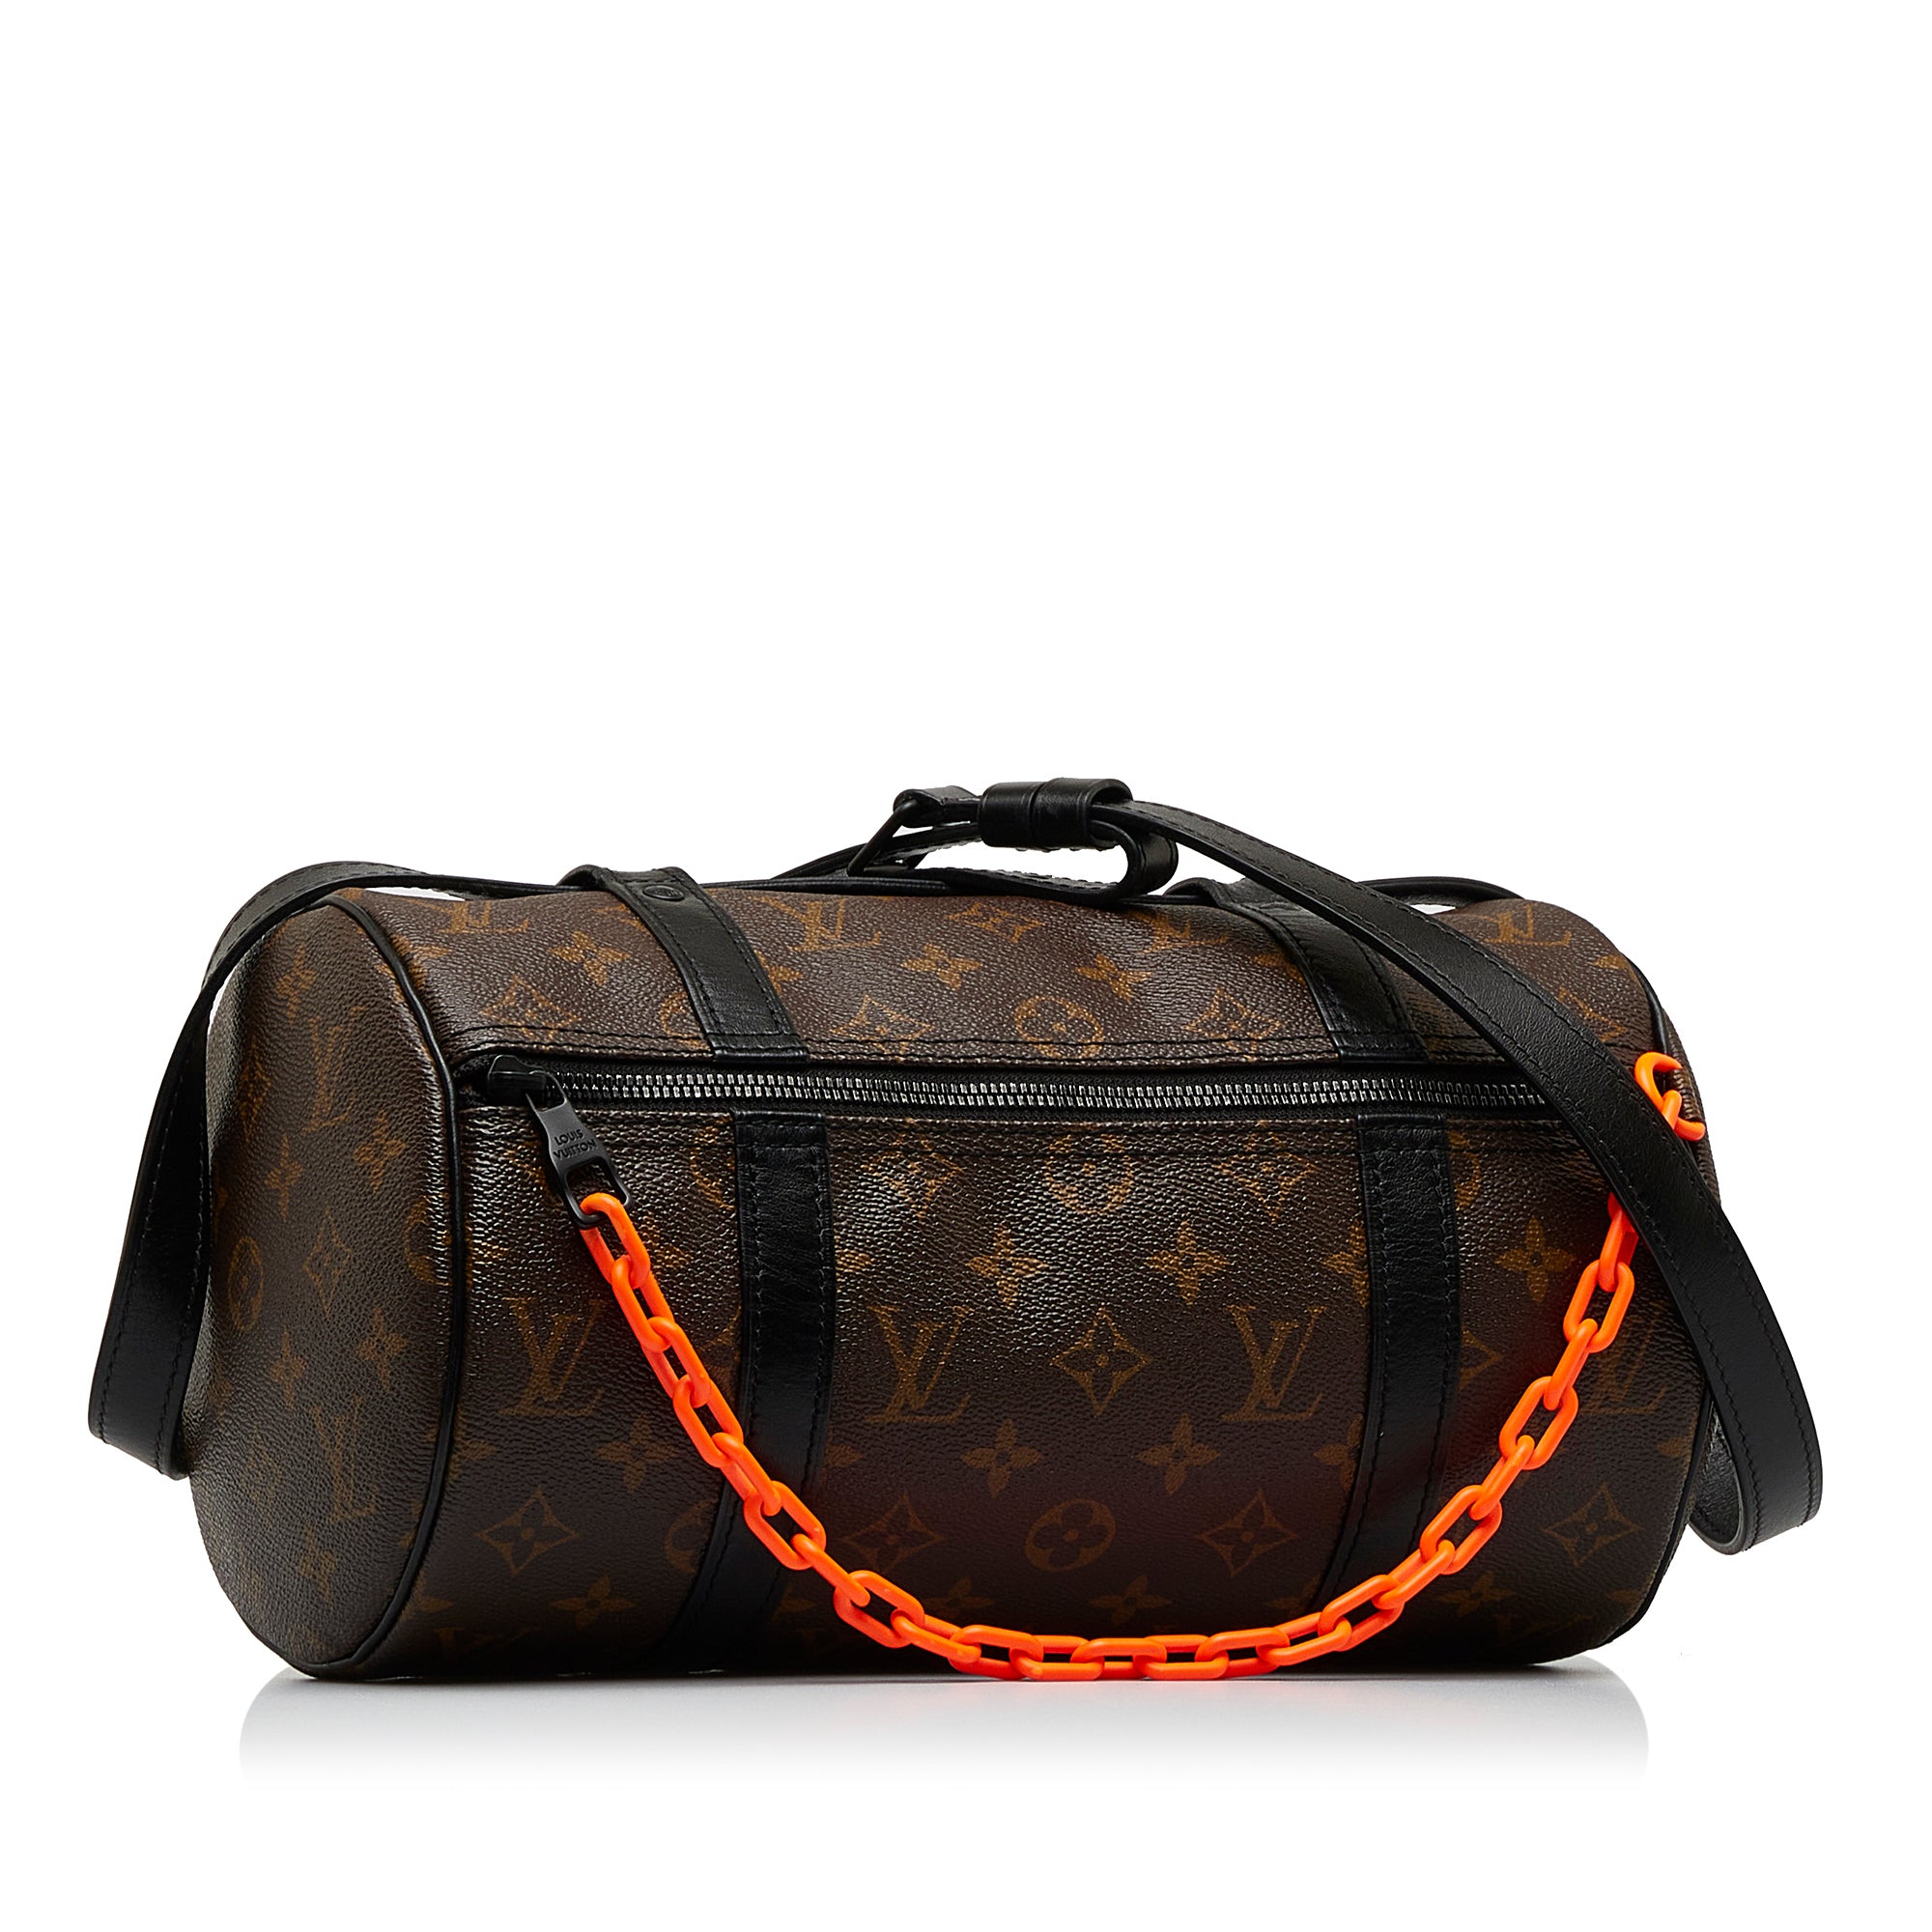 Louis Vuitton - Authenticated Alma Handbag - Plastic Brown for Women, Very Good Condition